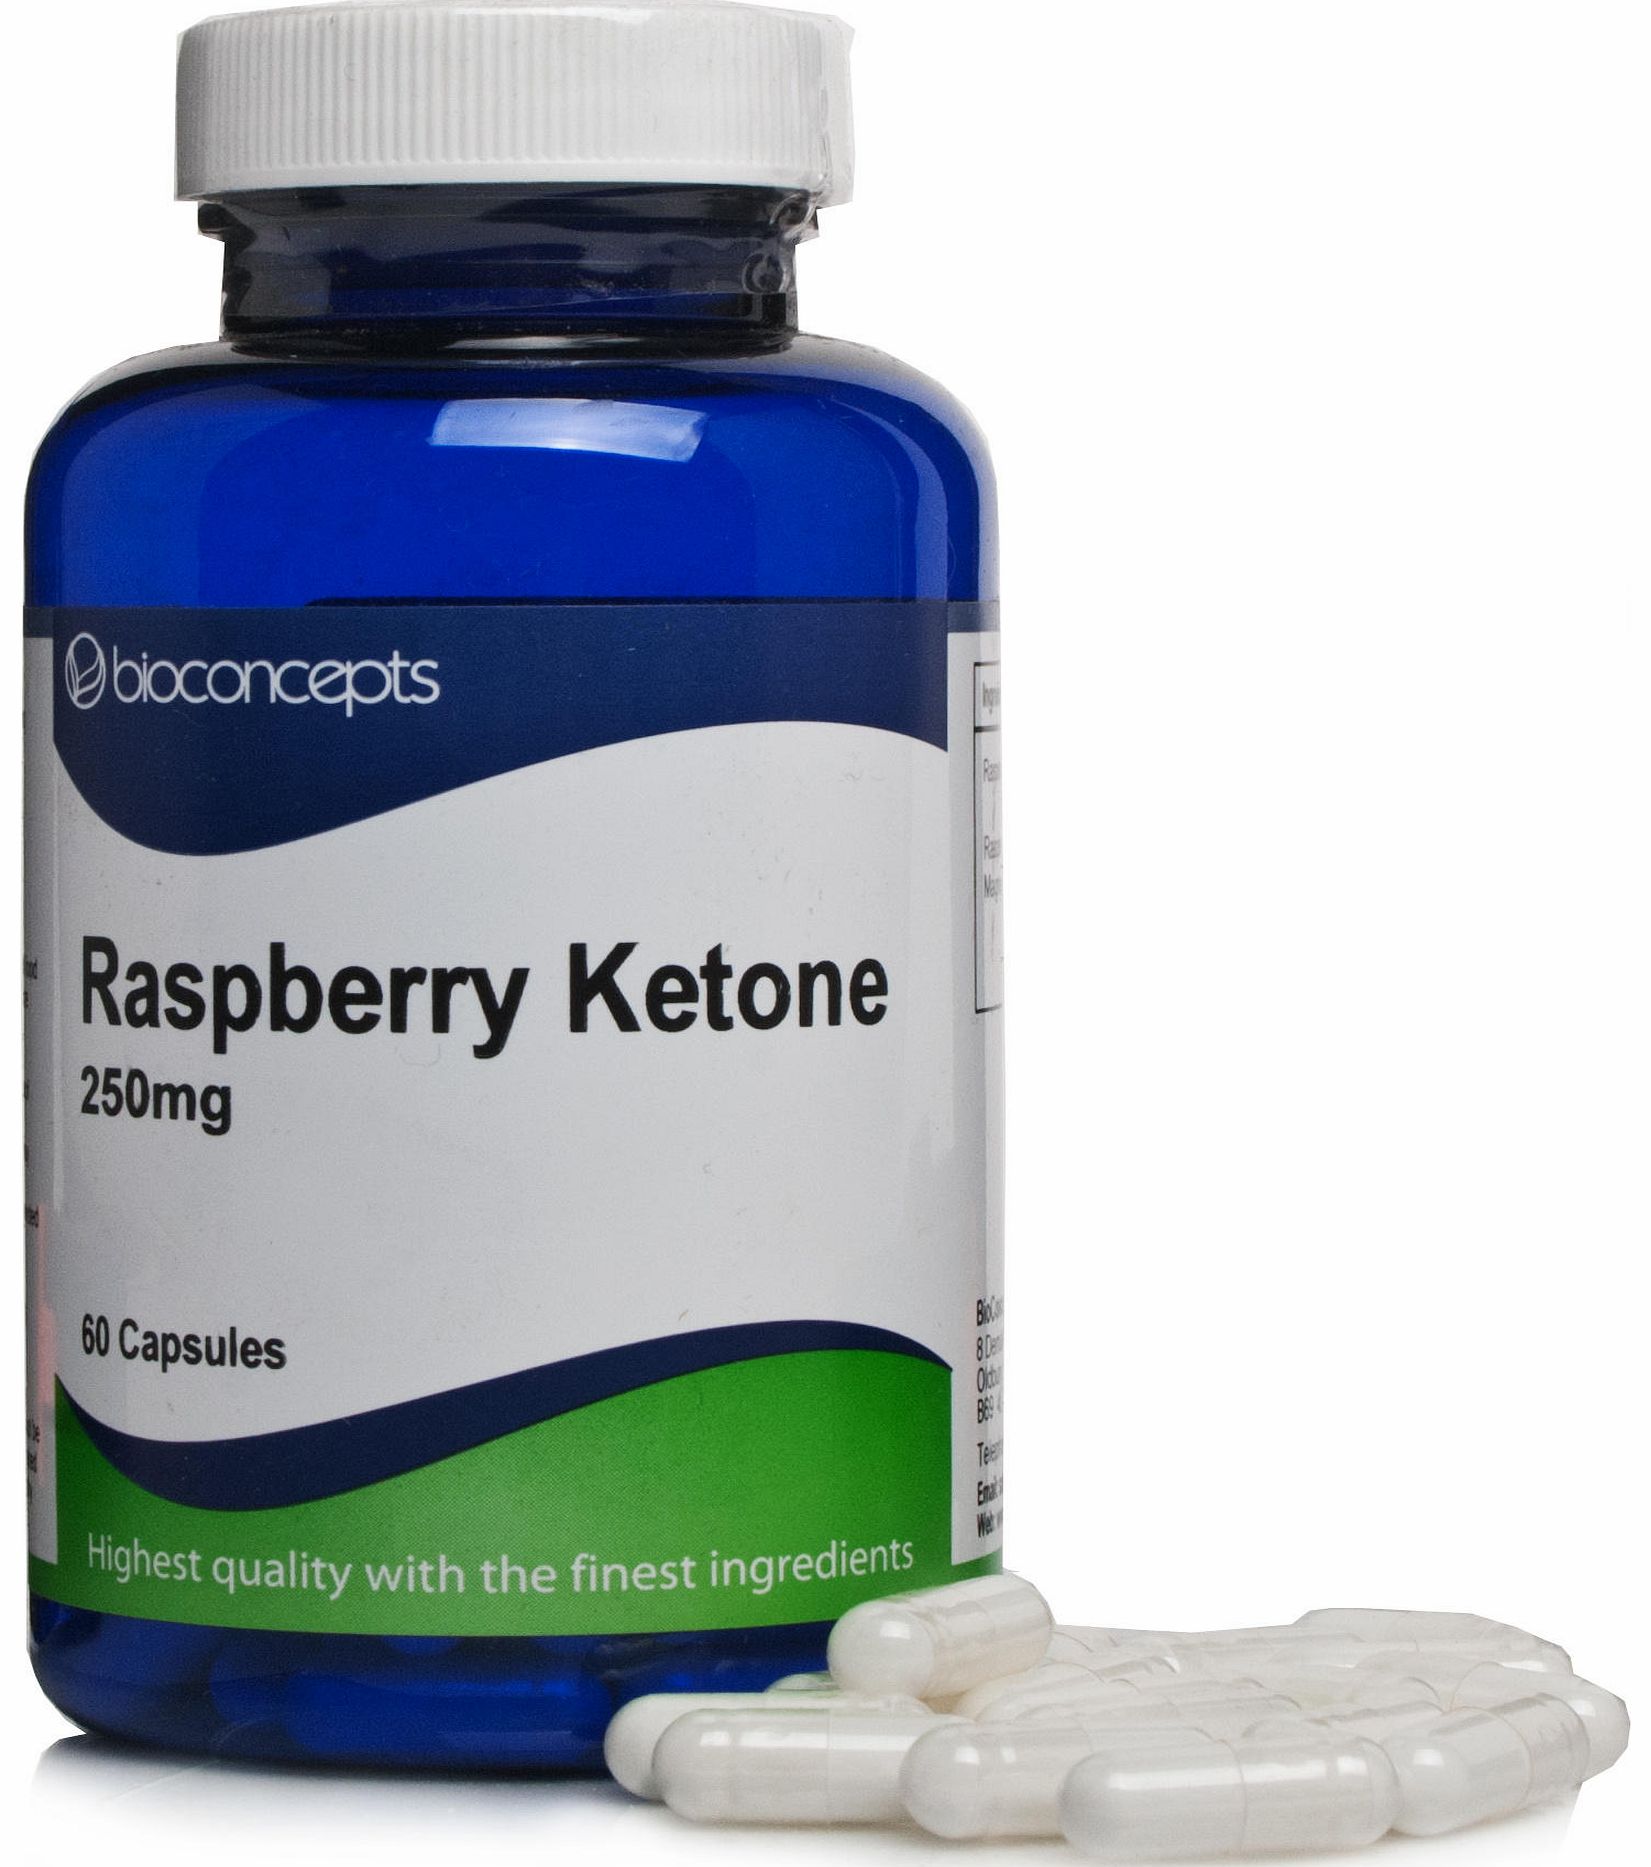 Bioconcepts Raspberry Ketone